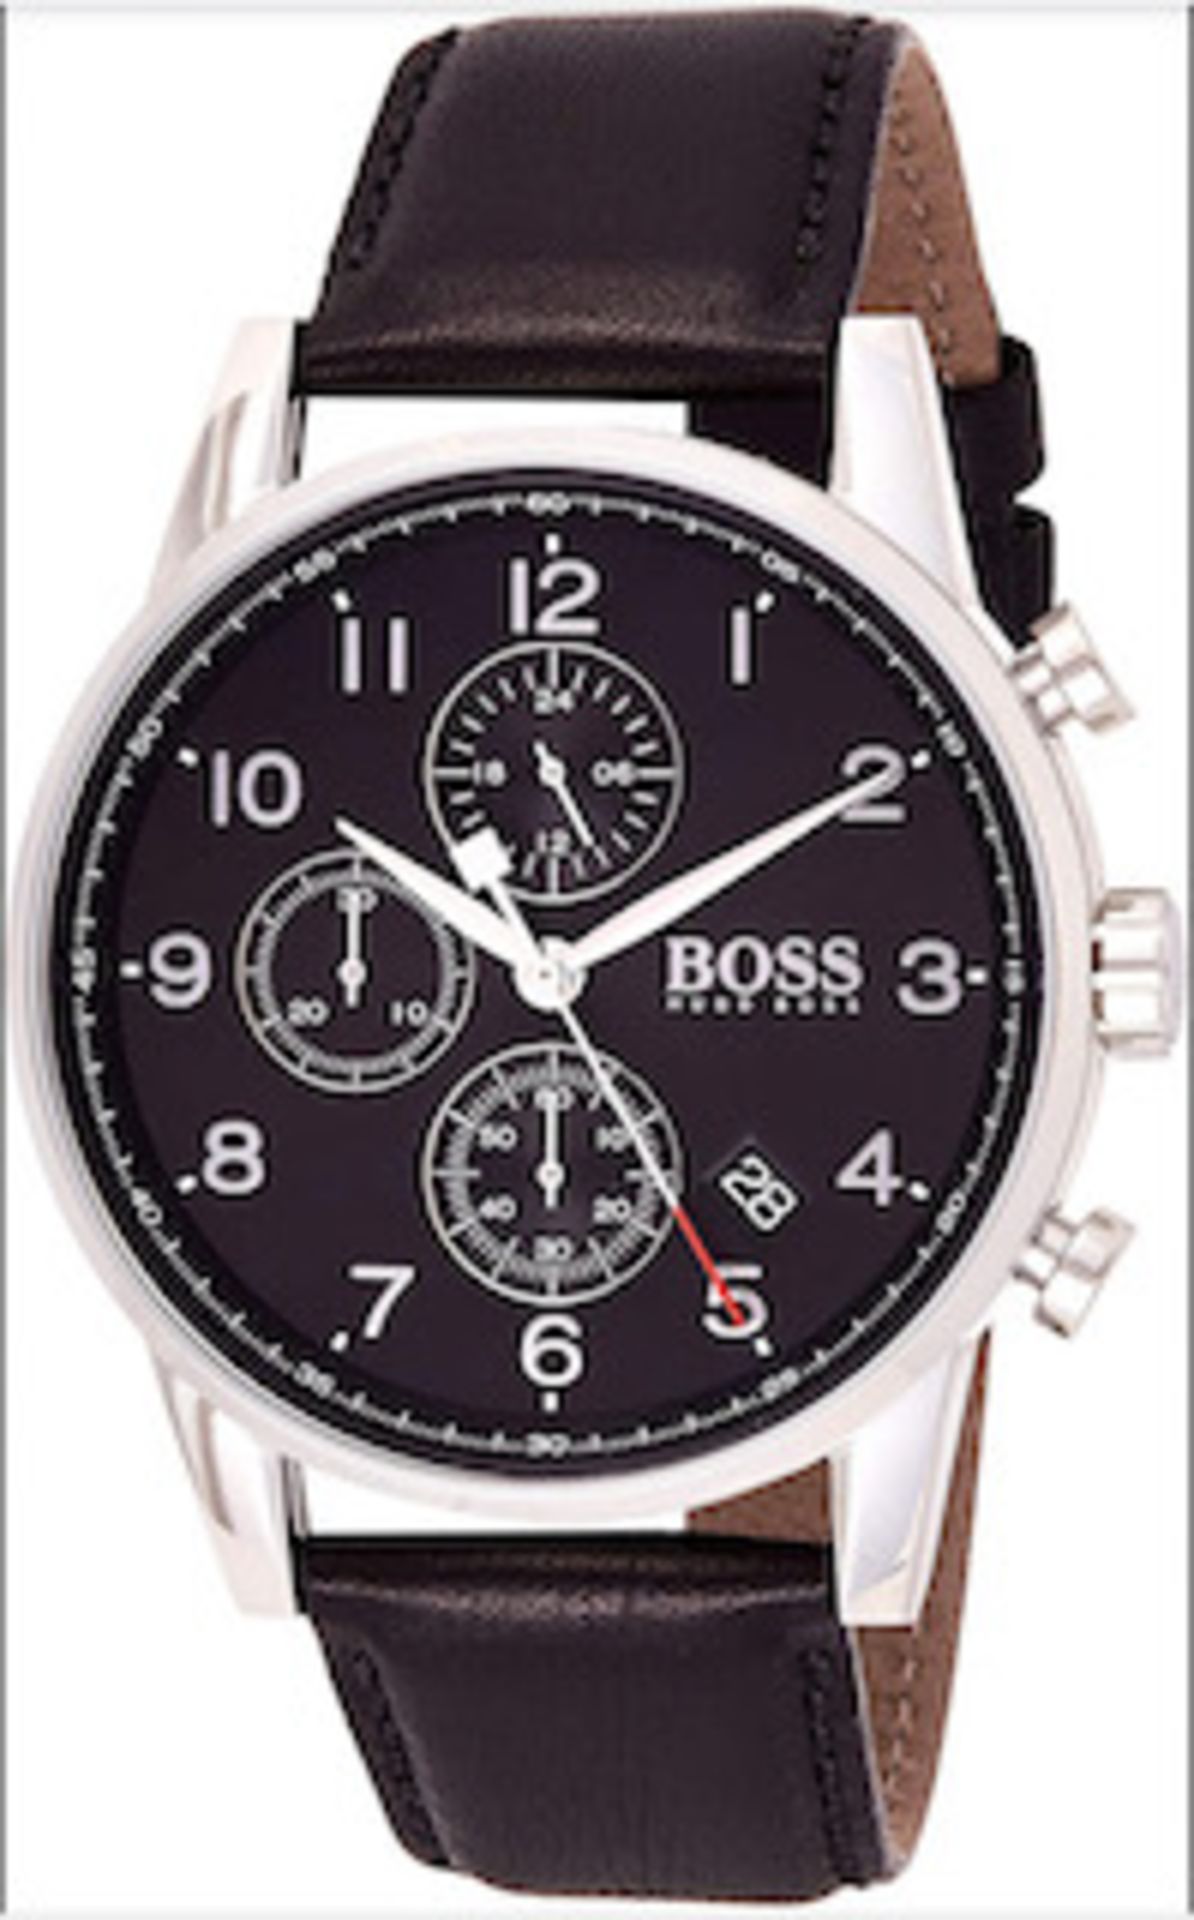 Hugo Boss 1513678 Men's Navigator Black Leather Strap Chronograph Watch - Image 2 of 6